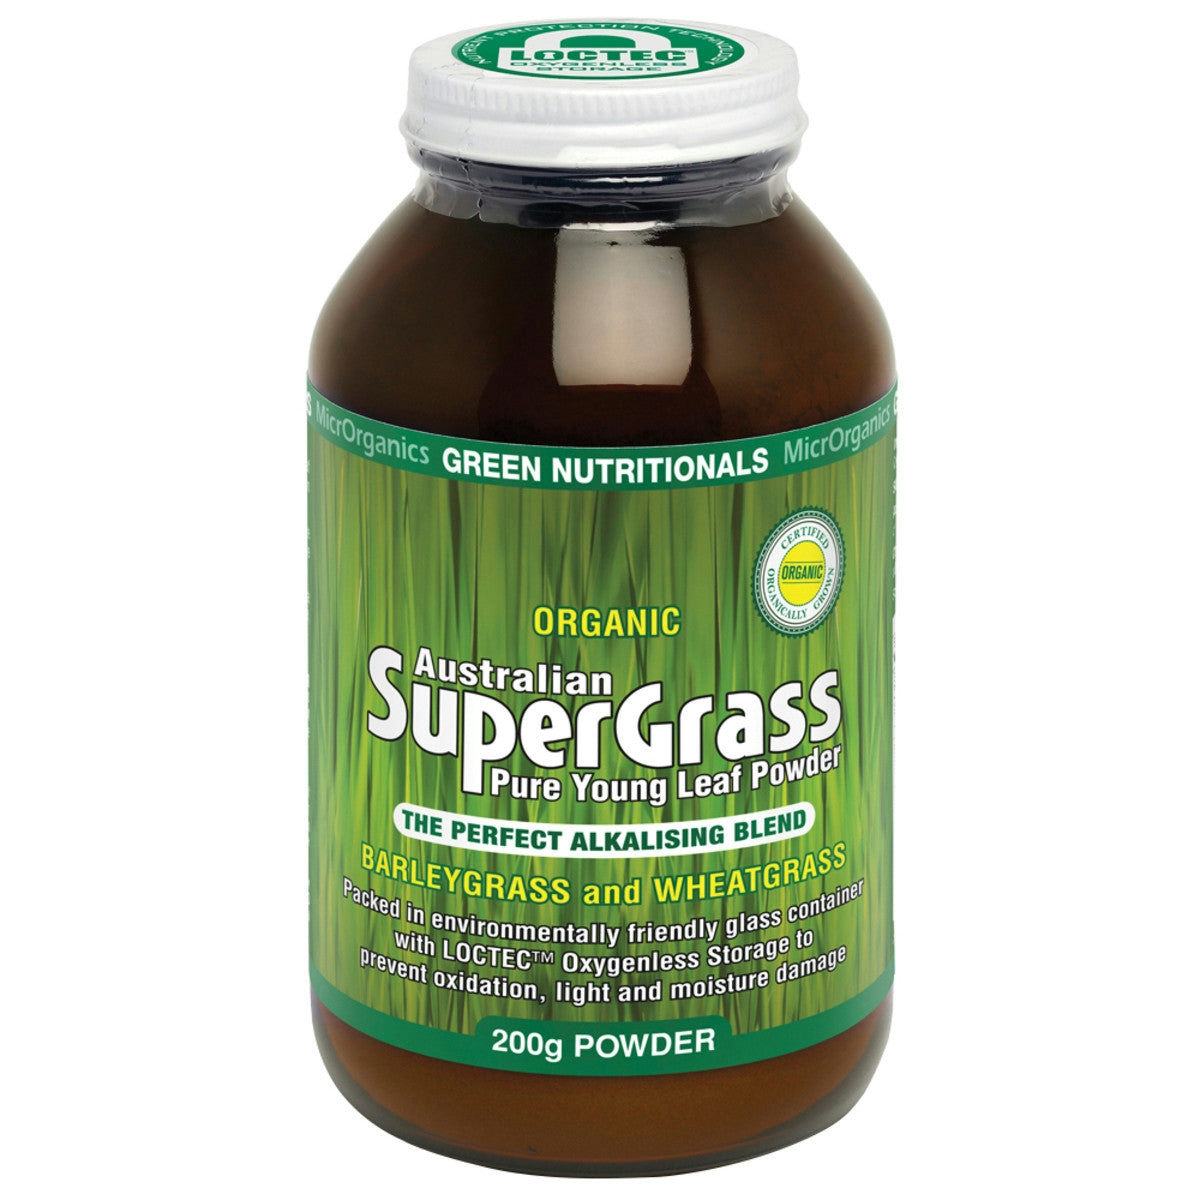 image of MicrOrganics Green Nutritionals Organic Australian SuperGrass 200g Powder on white background